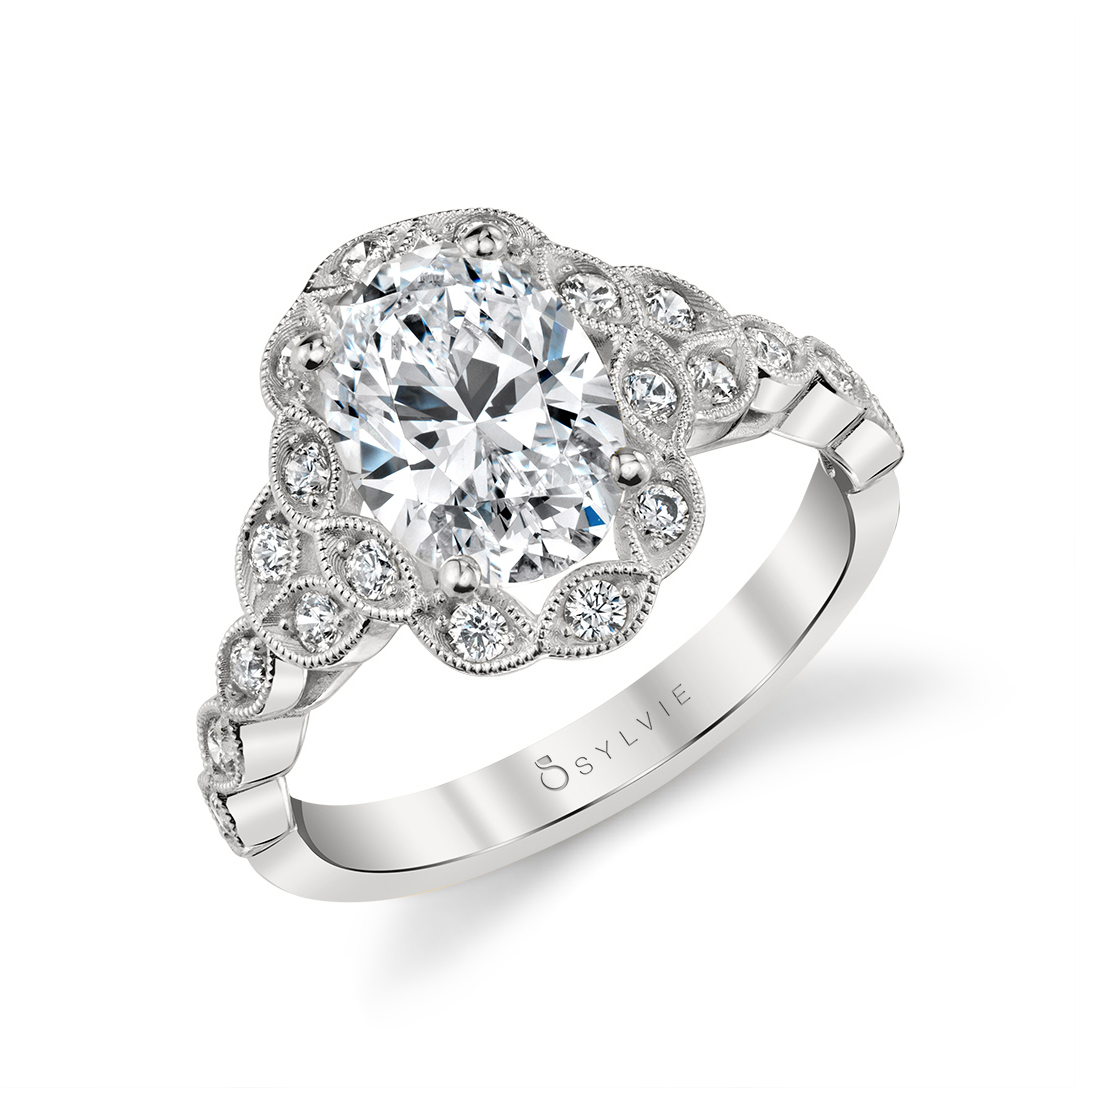 Profile Image of the Flower Engagement Ring - Jori